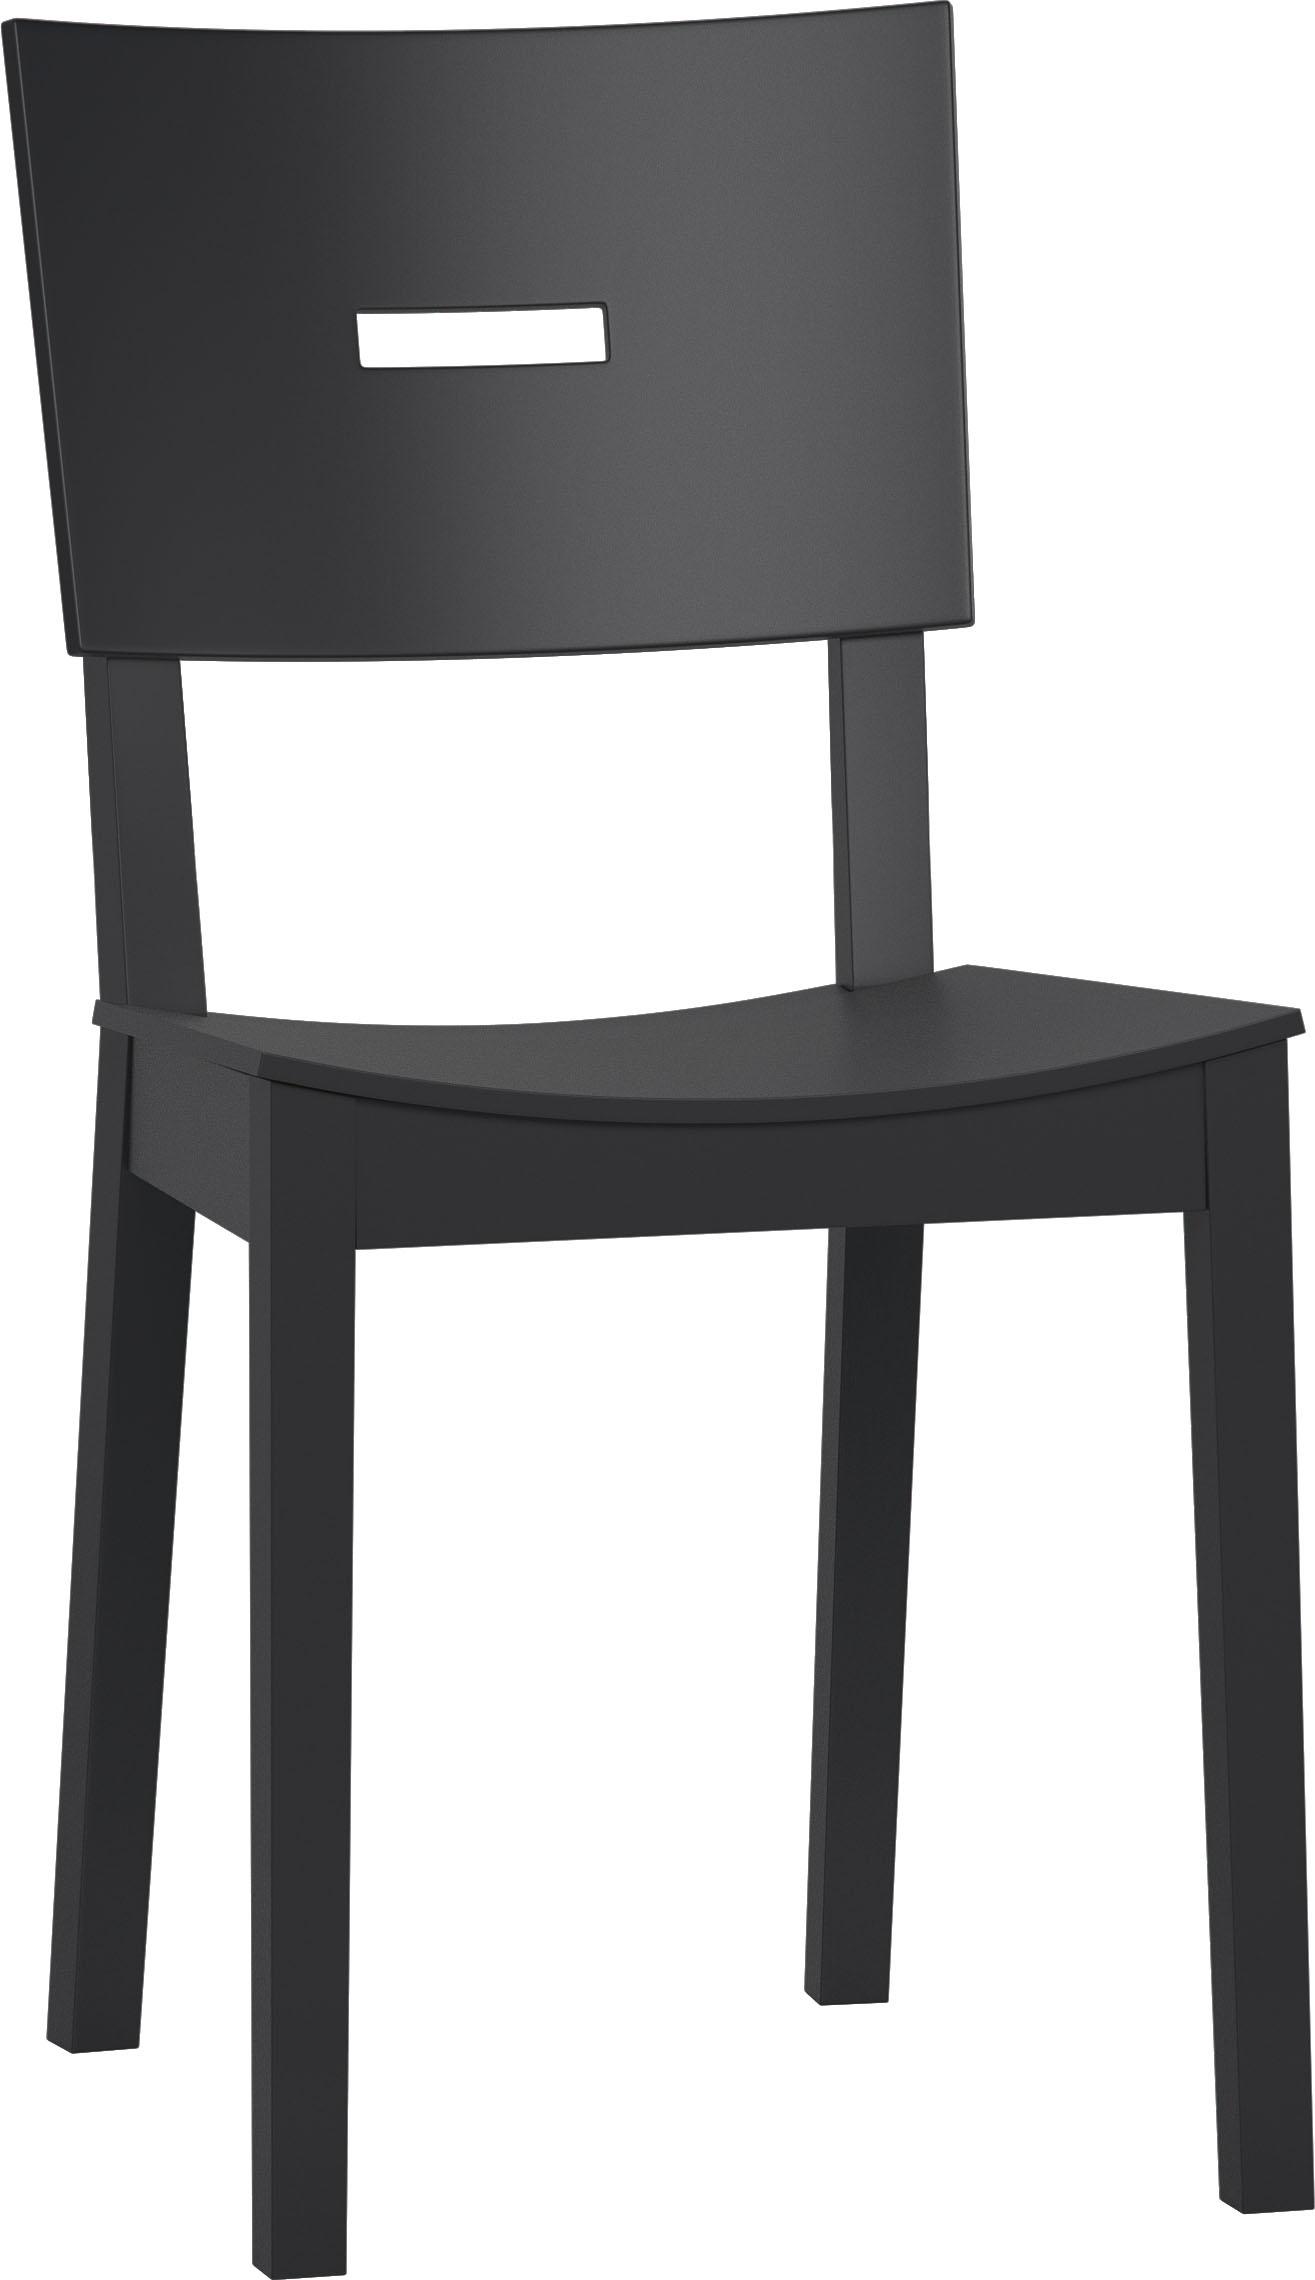 Chair Simple black